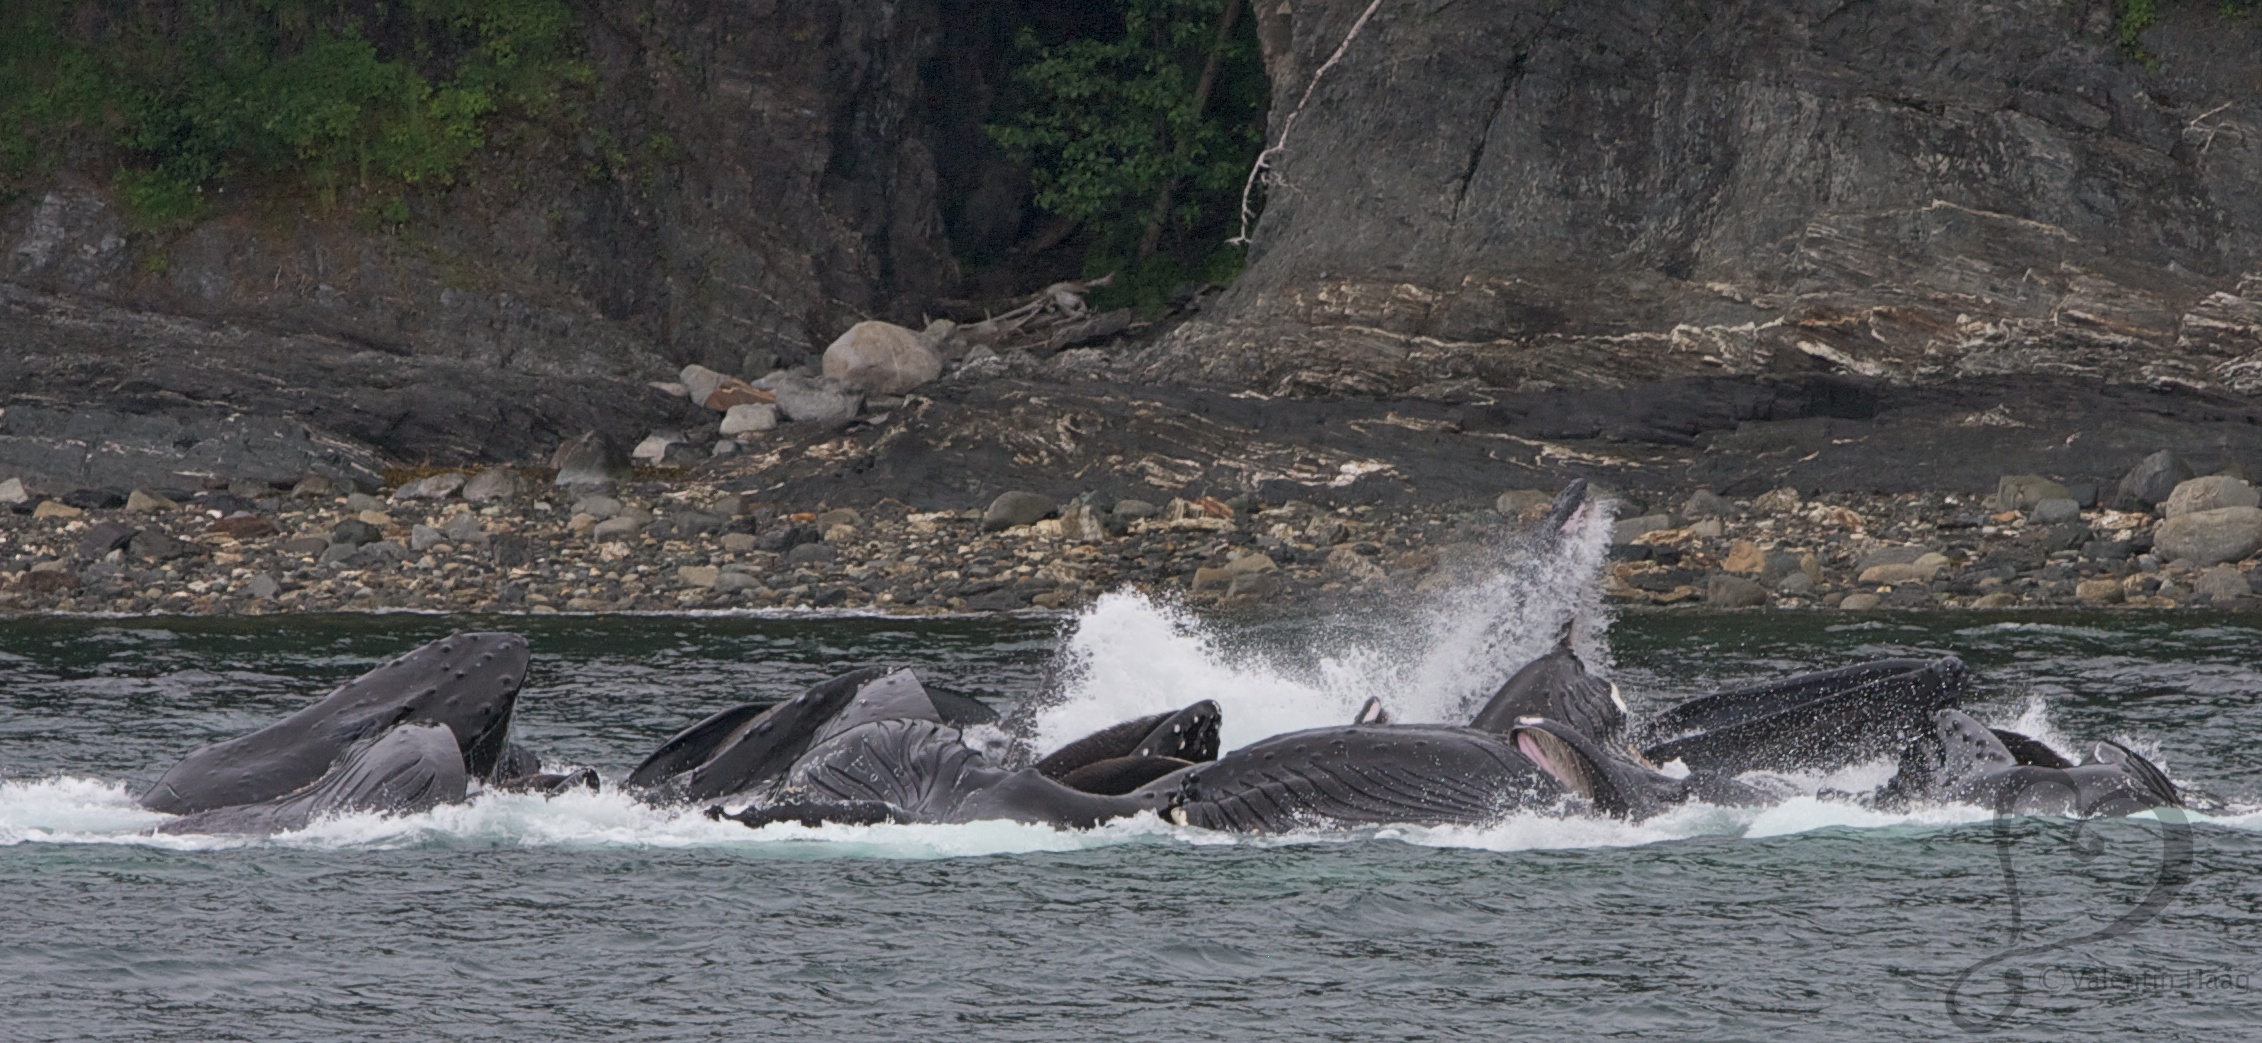 Humpback whales, Bubble Net Feeding